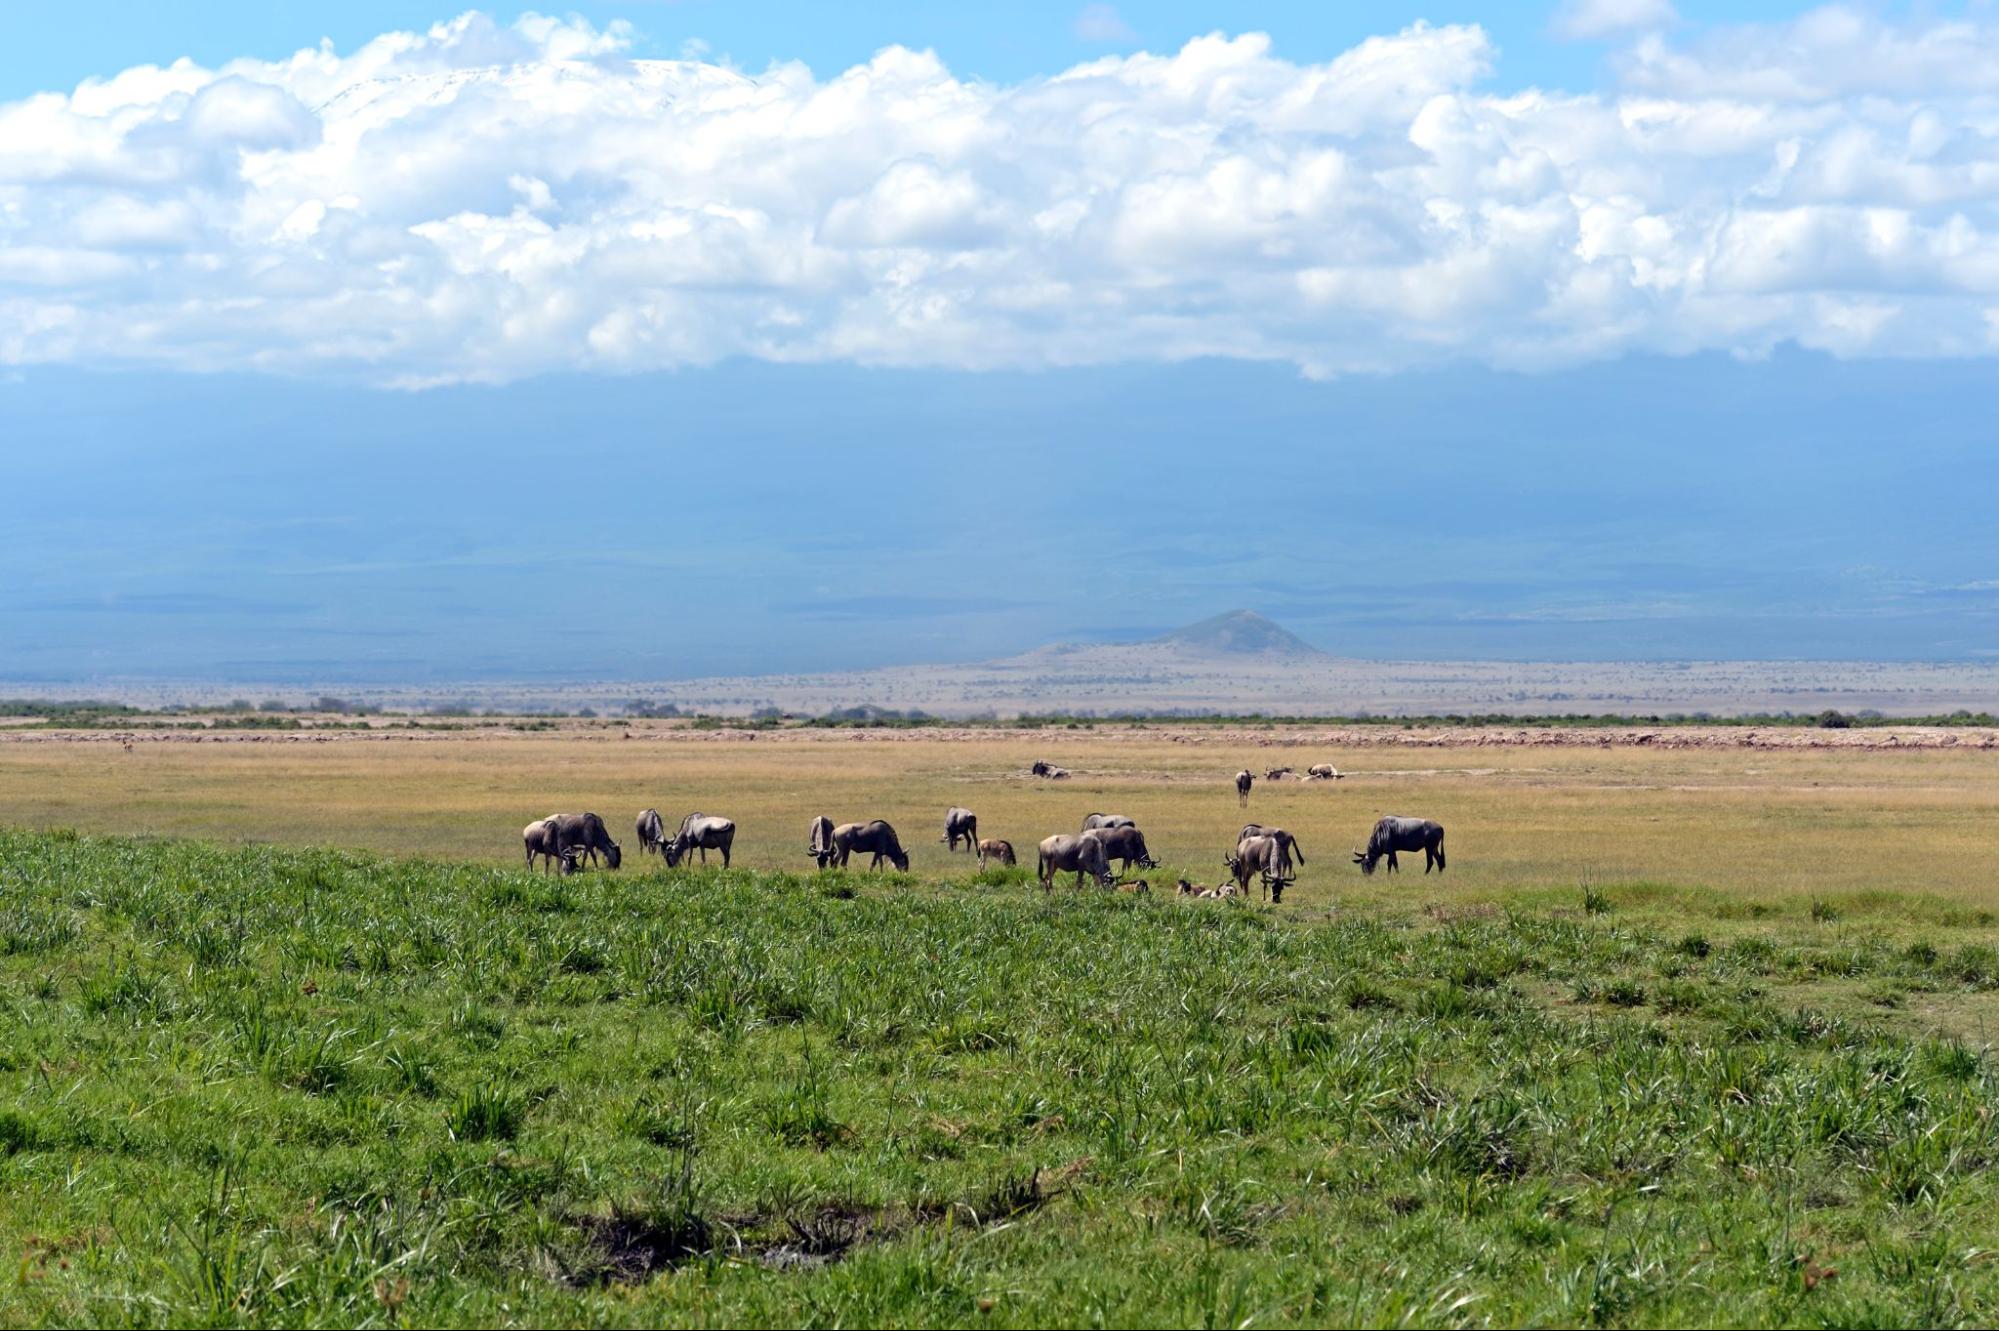 Wildlife at Mt. Kenya National Park